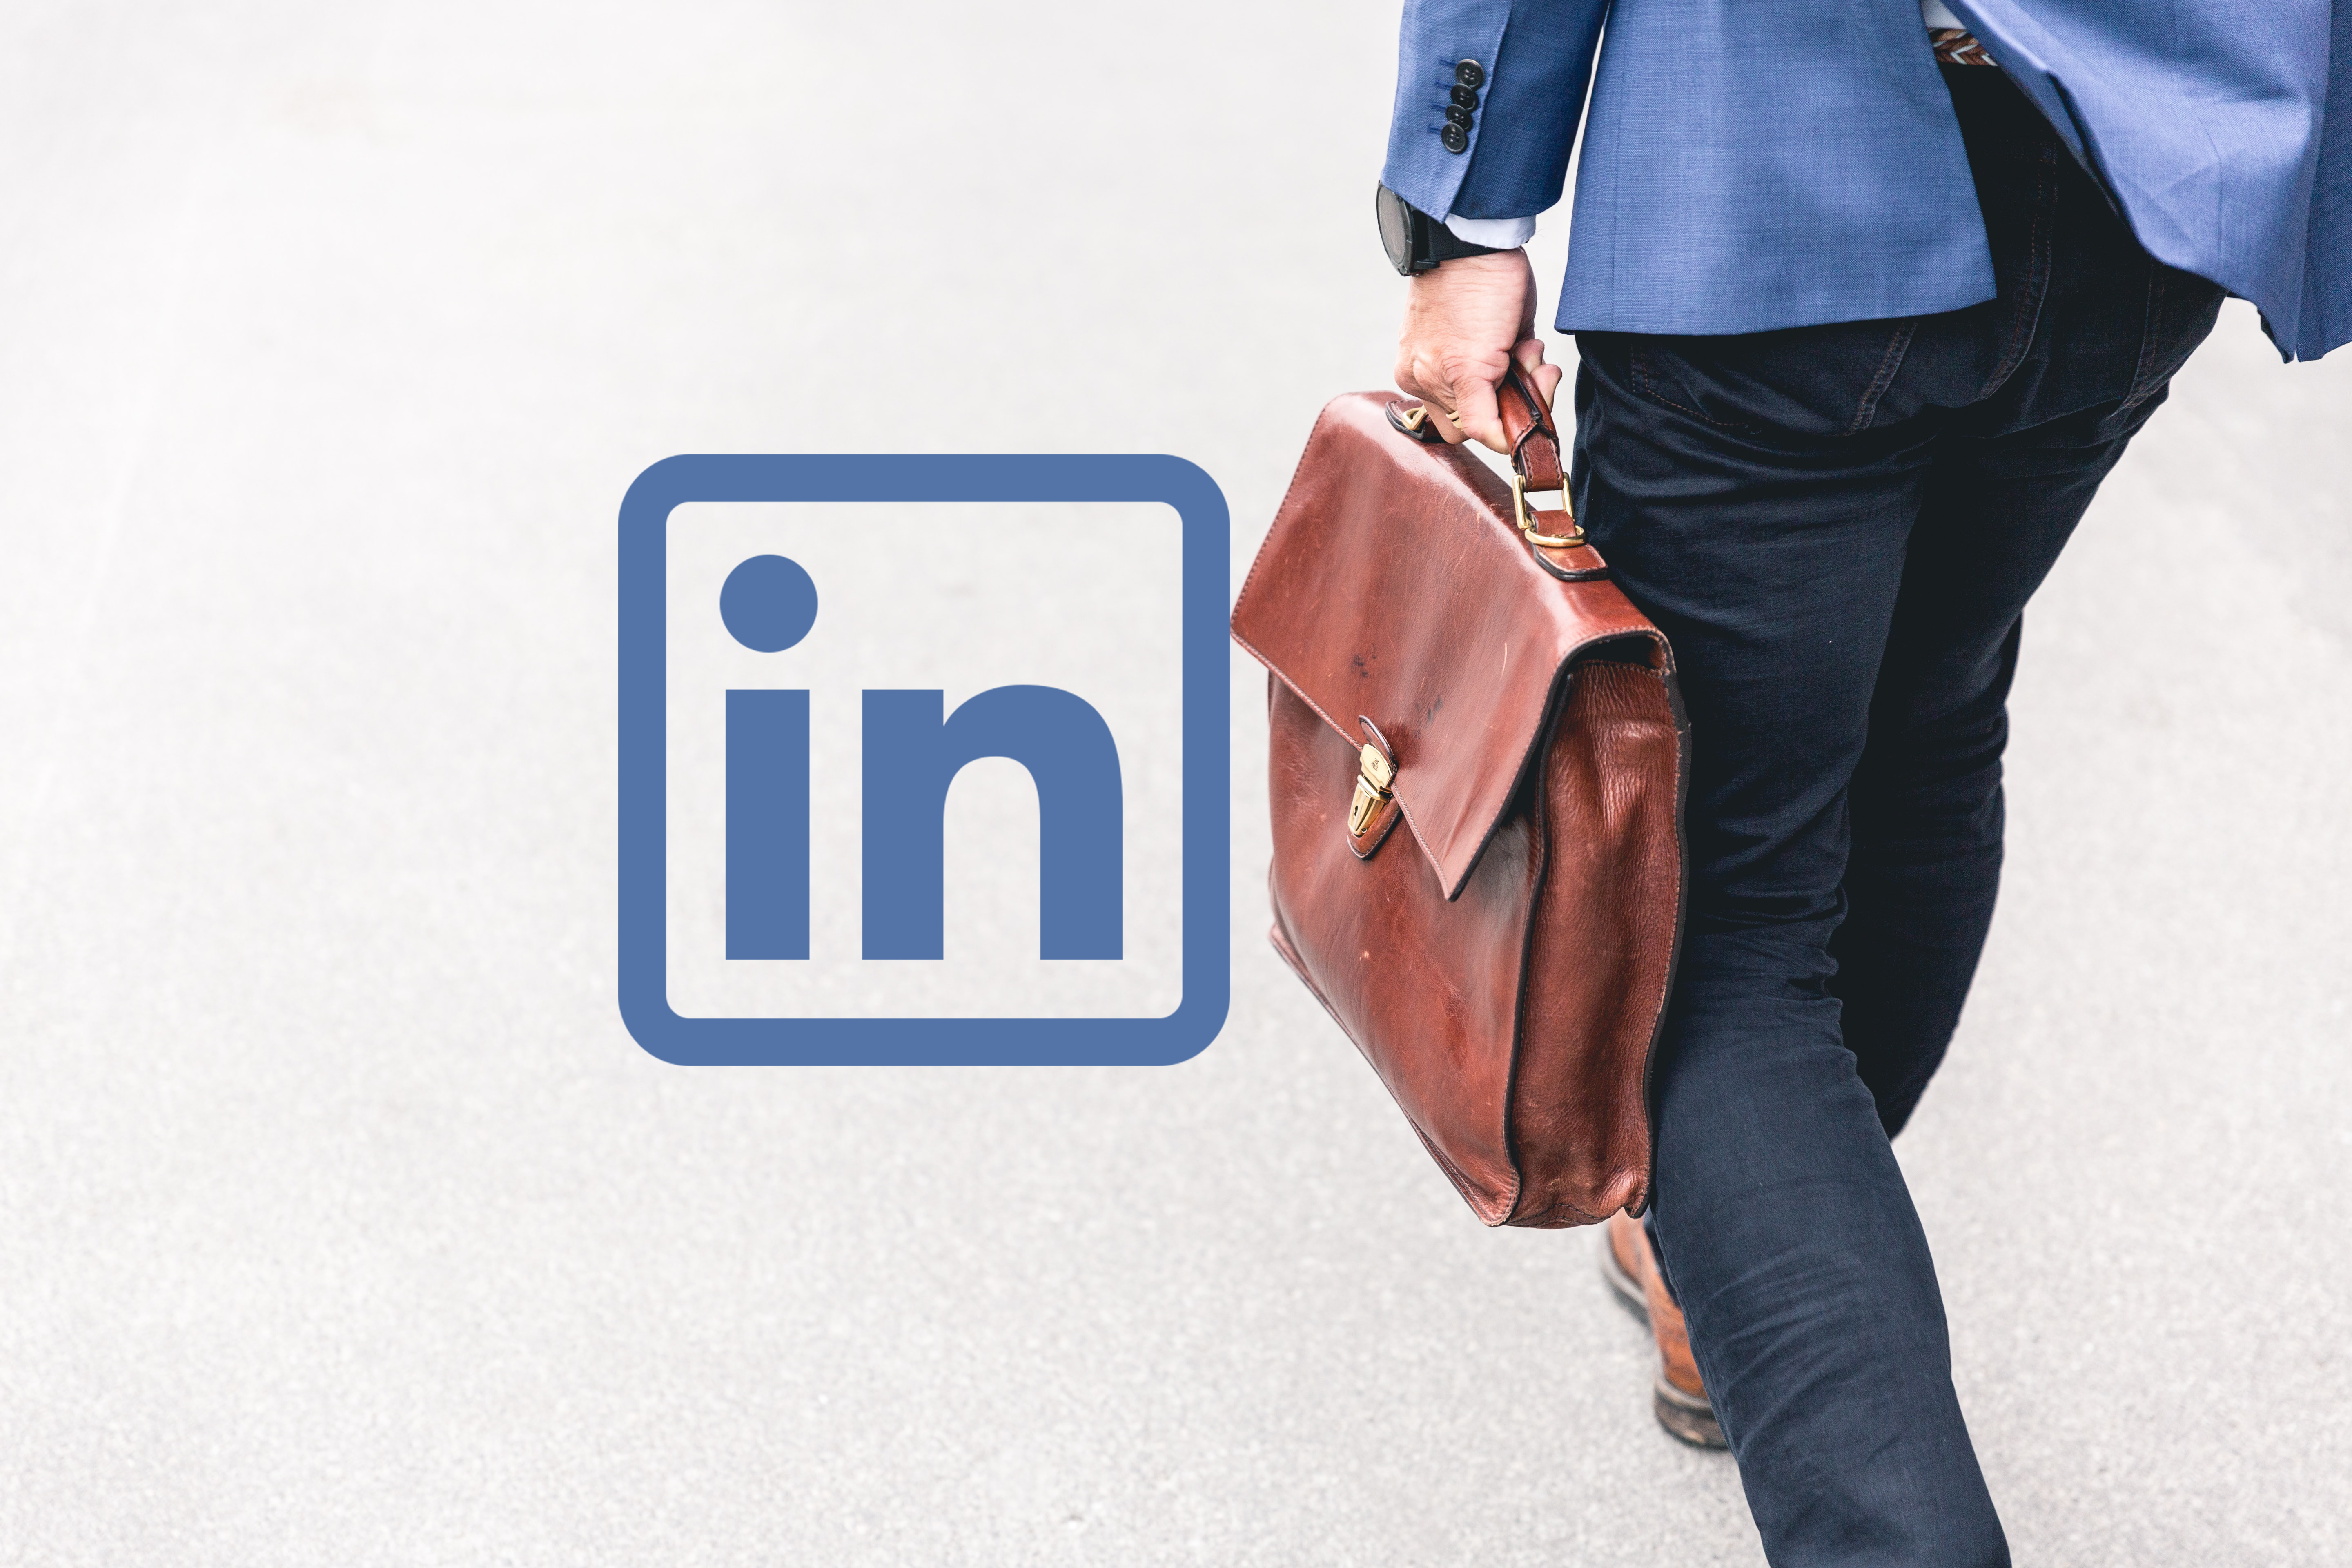 Find Job Using LinkedIn